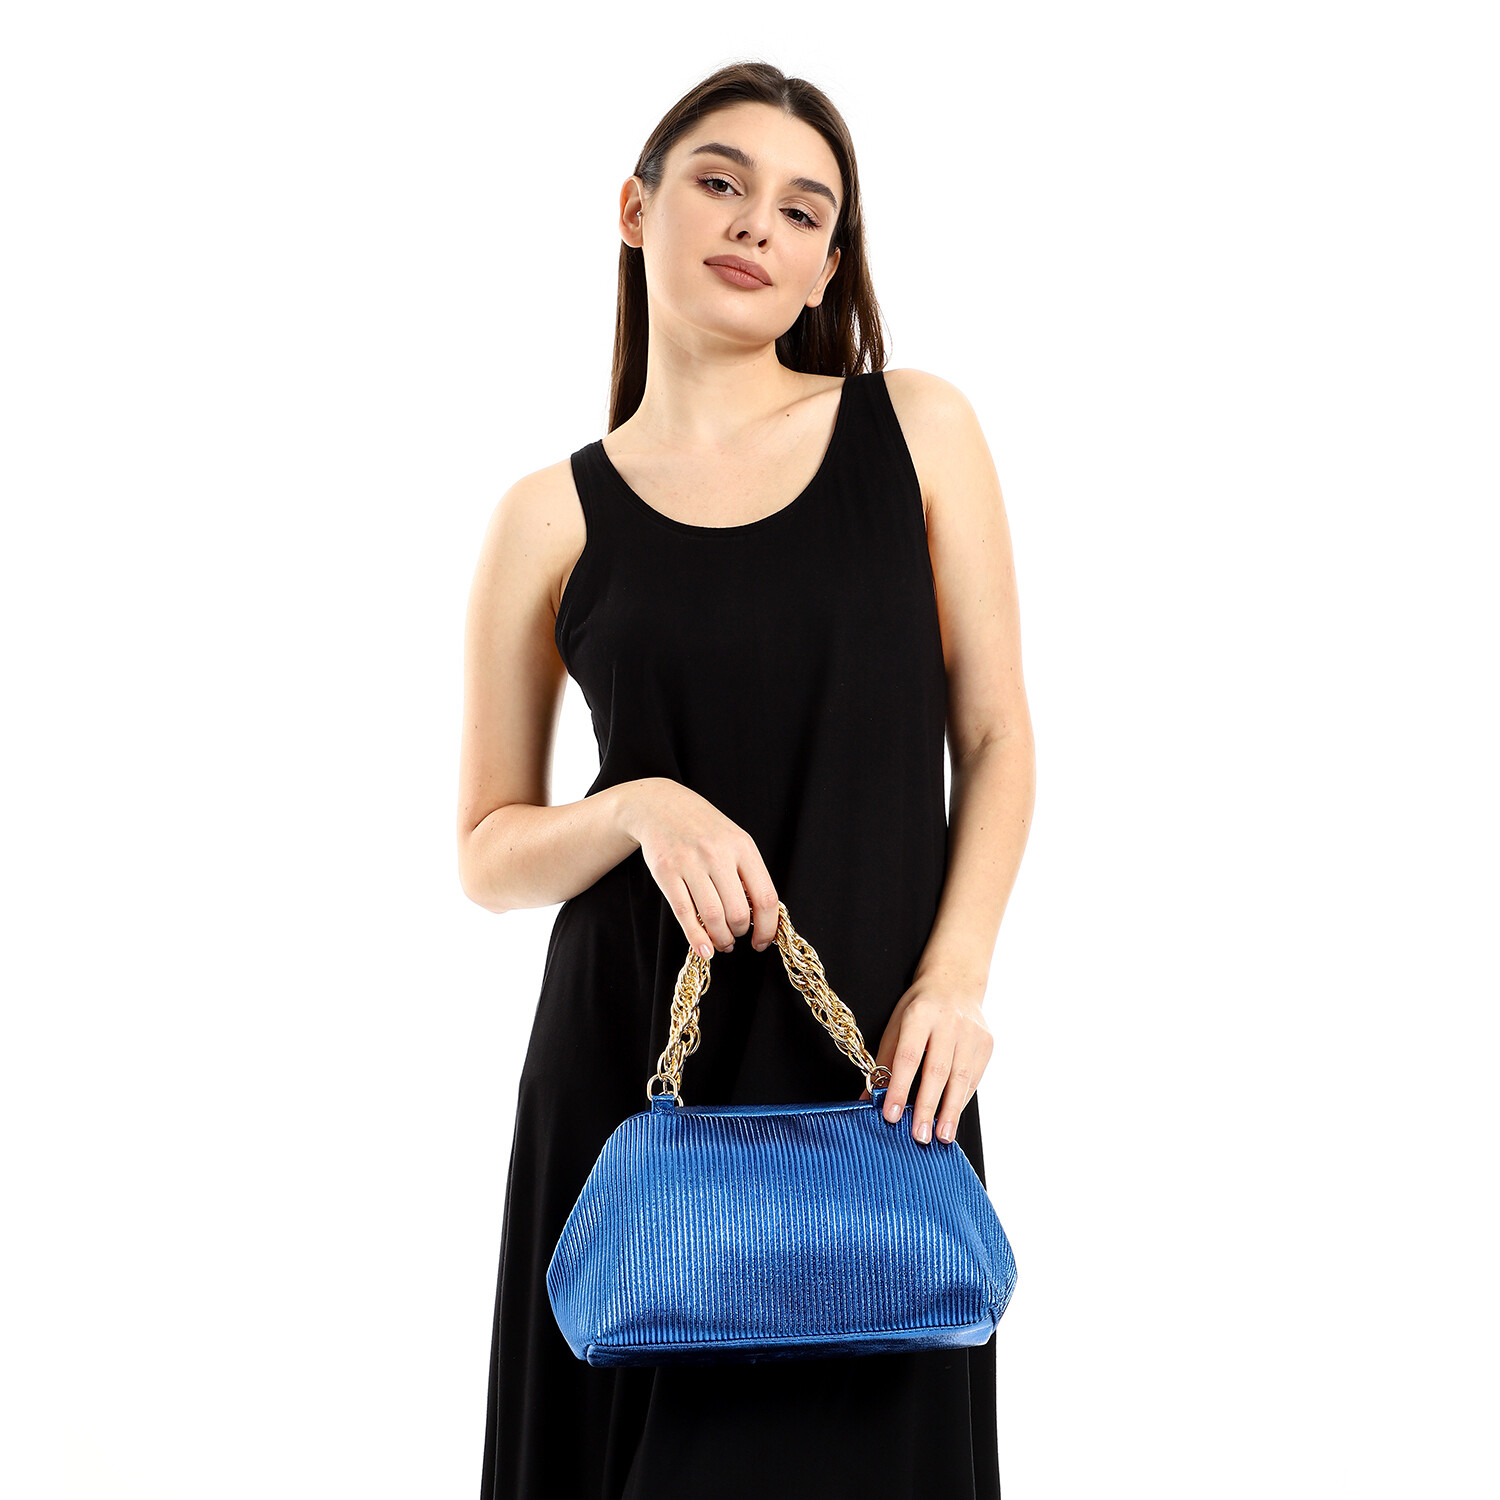 Ribbed Leather Fashionable Handbag - Royal Blue
-4951